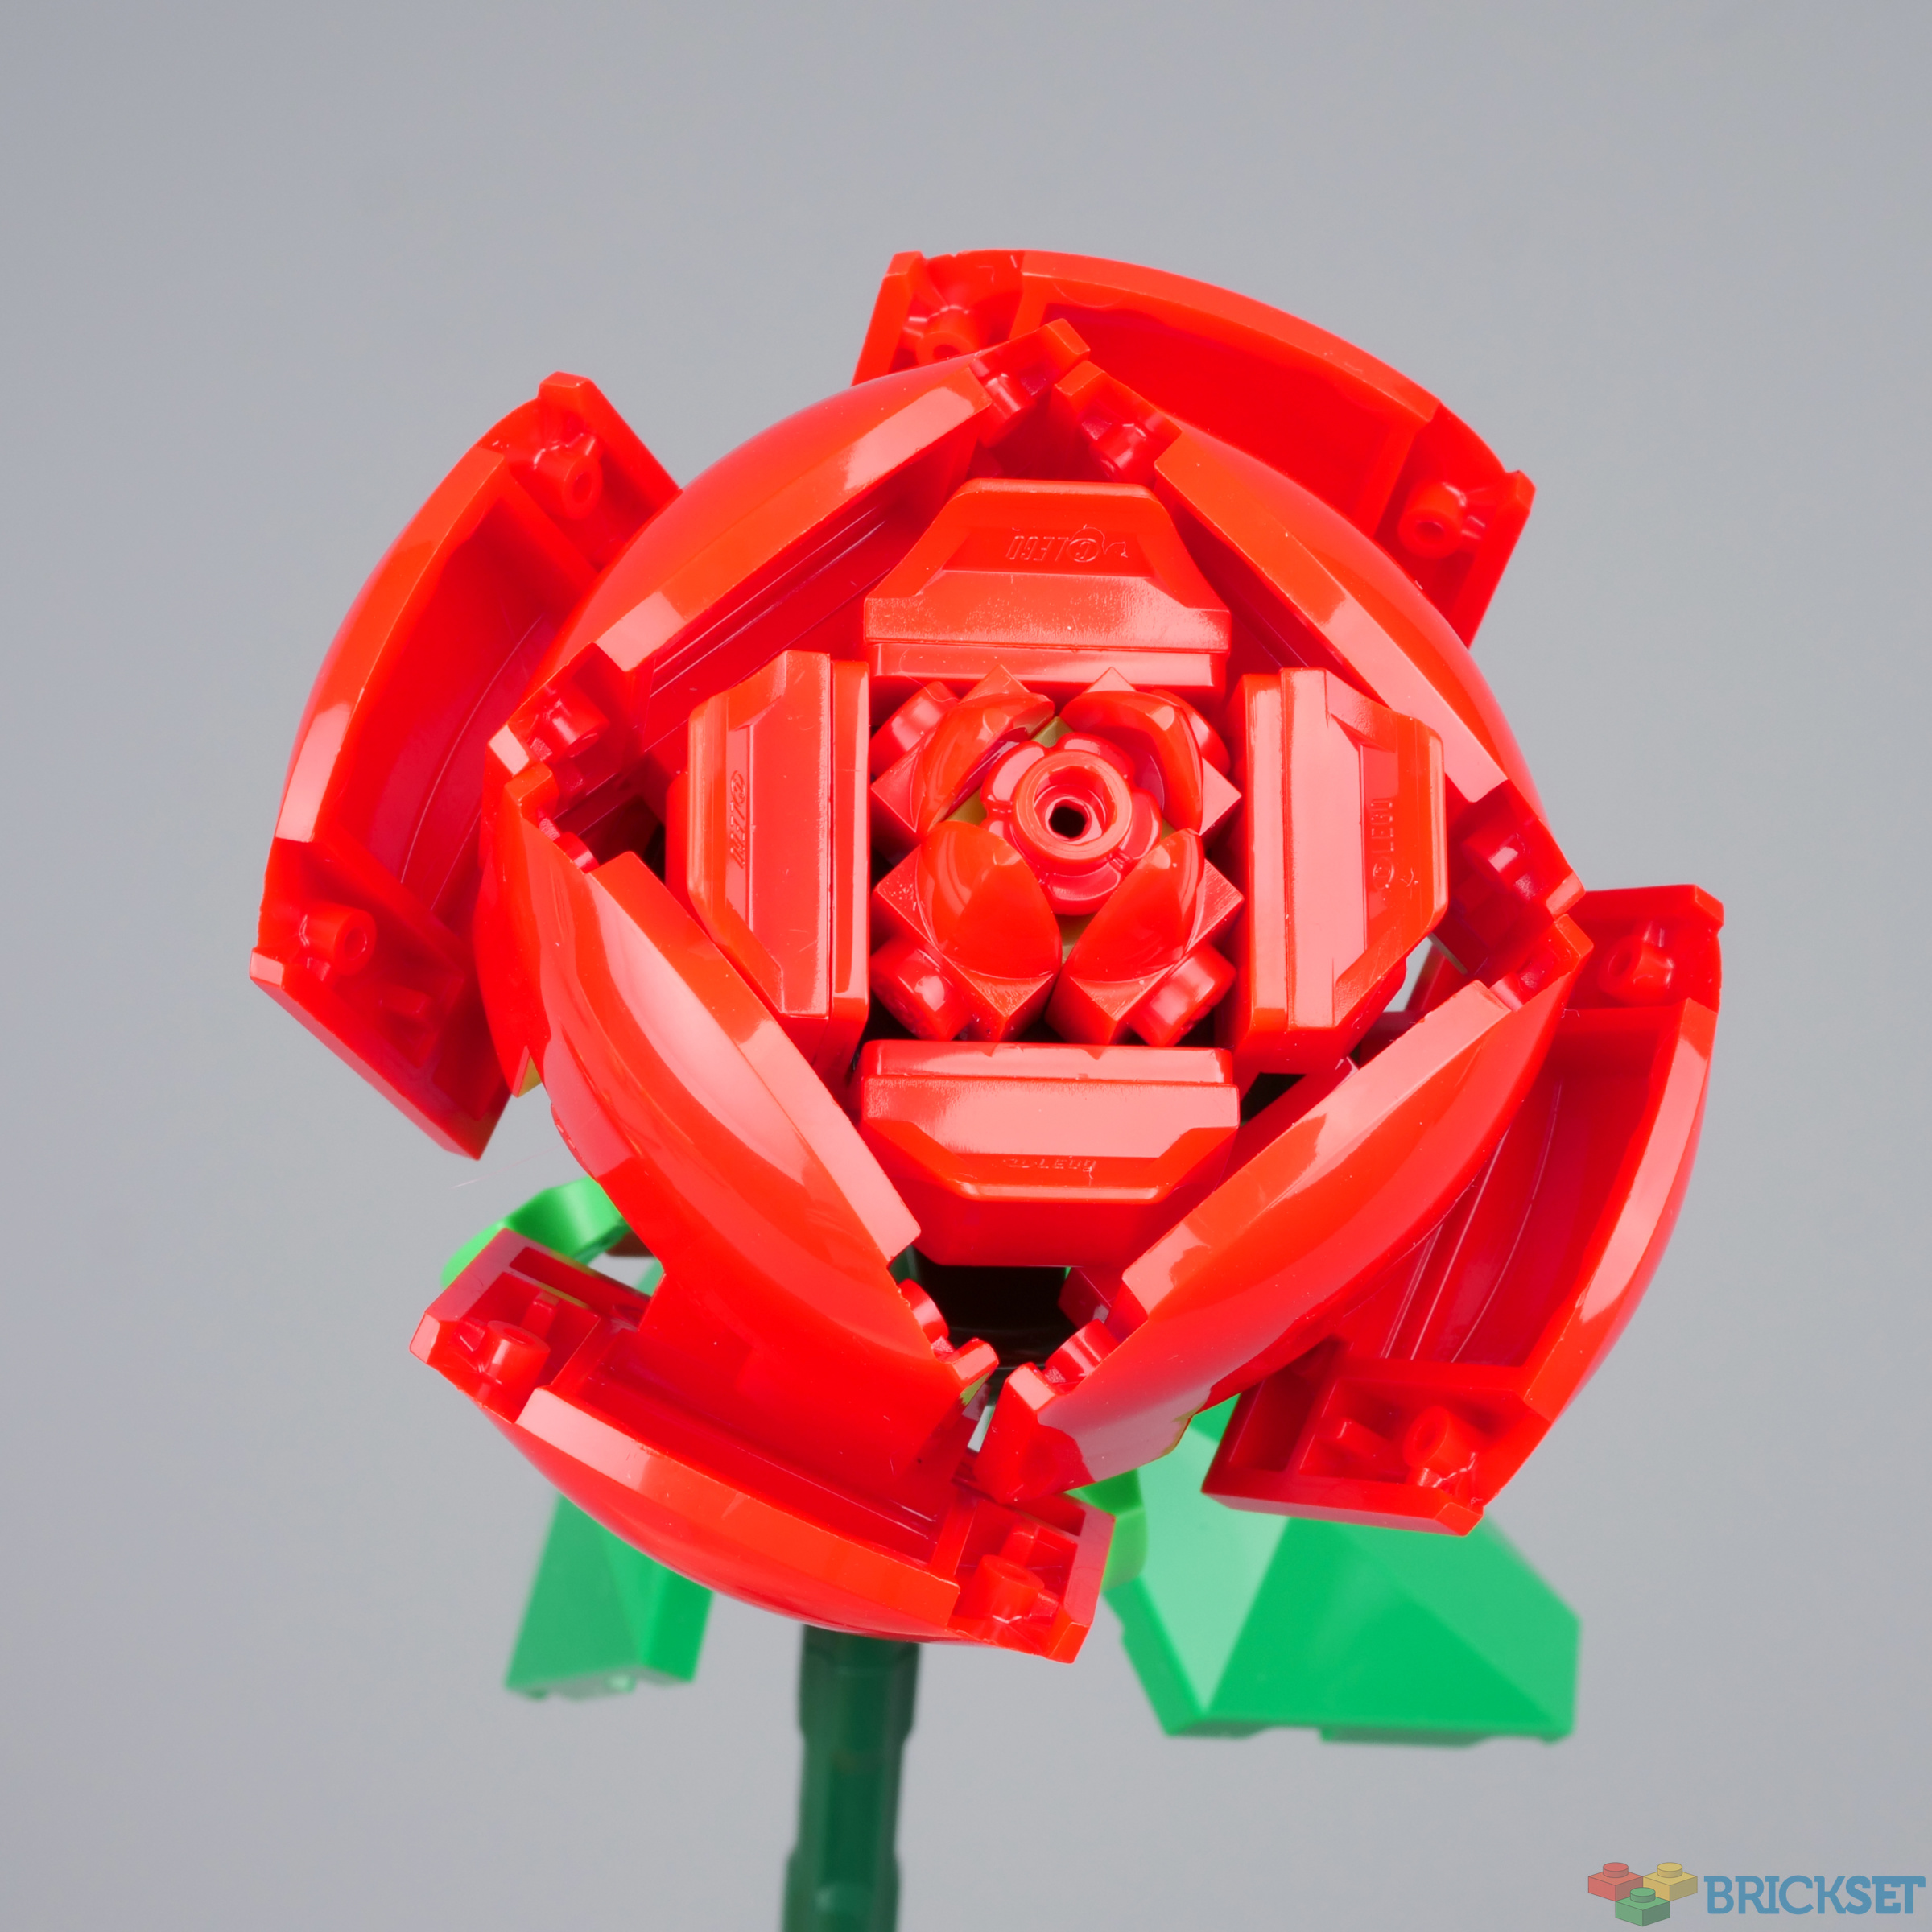 LEGO 40460 Roses Instructions, Creator